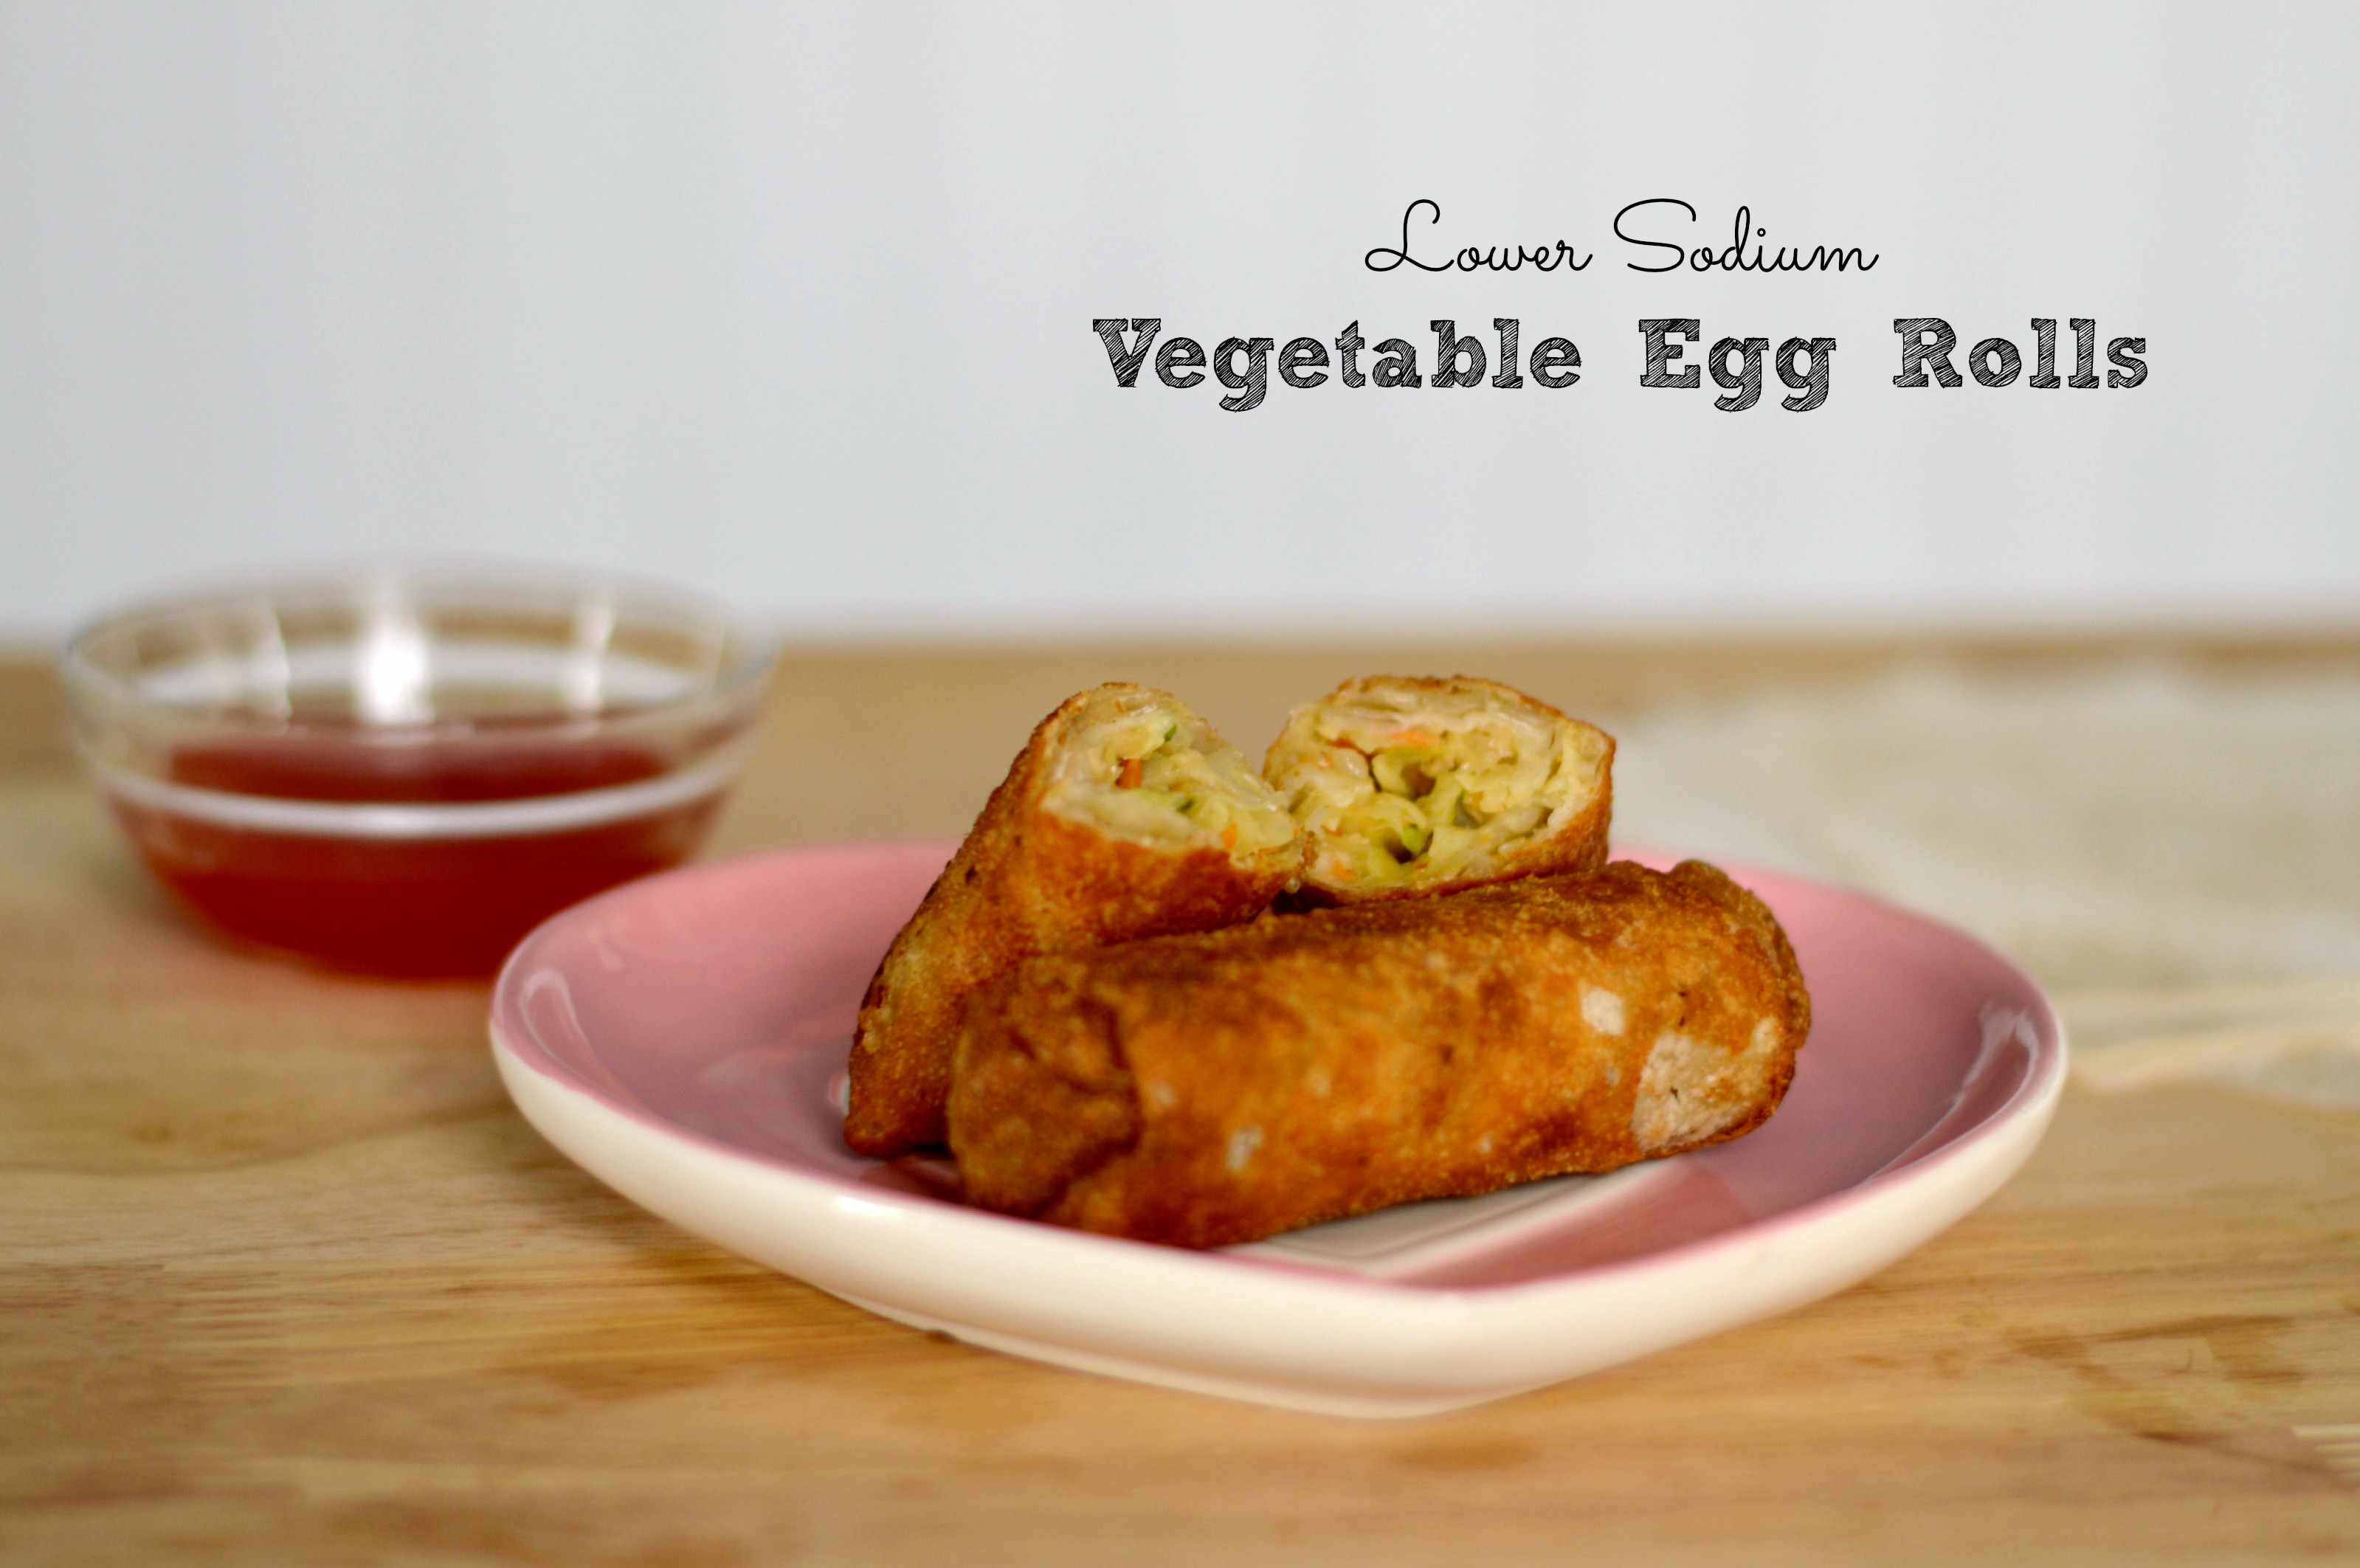 https://sofabfood.com/wp-content/uploads/2015/03/low-sodium-vegetable-egg-rolls.jpg